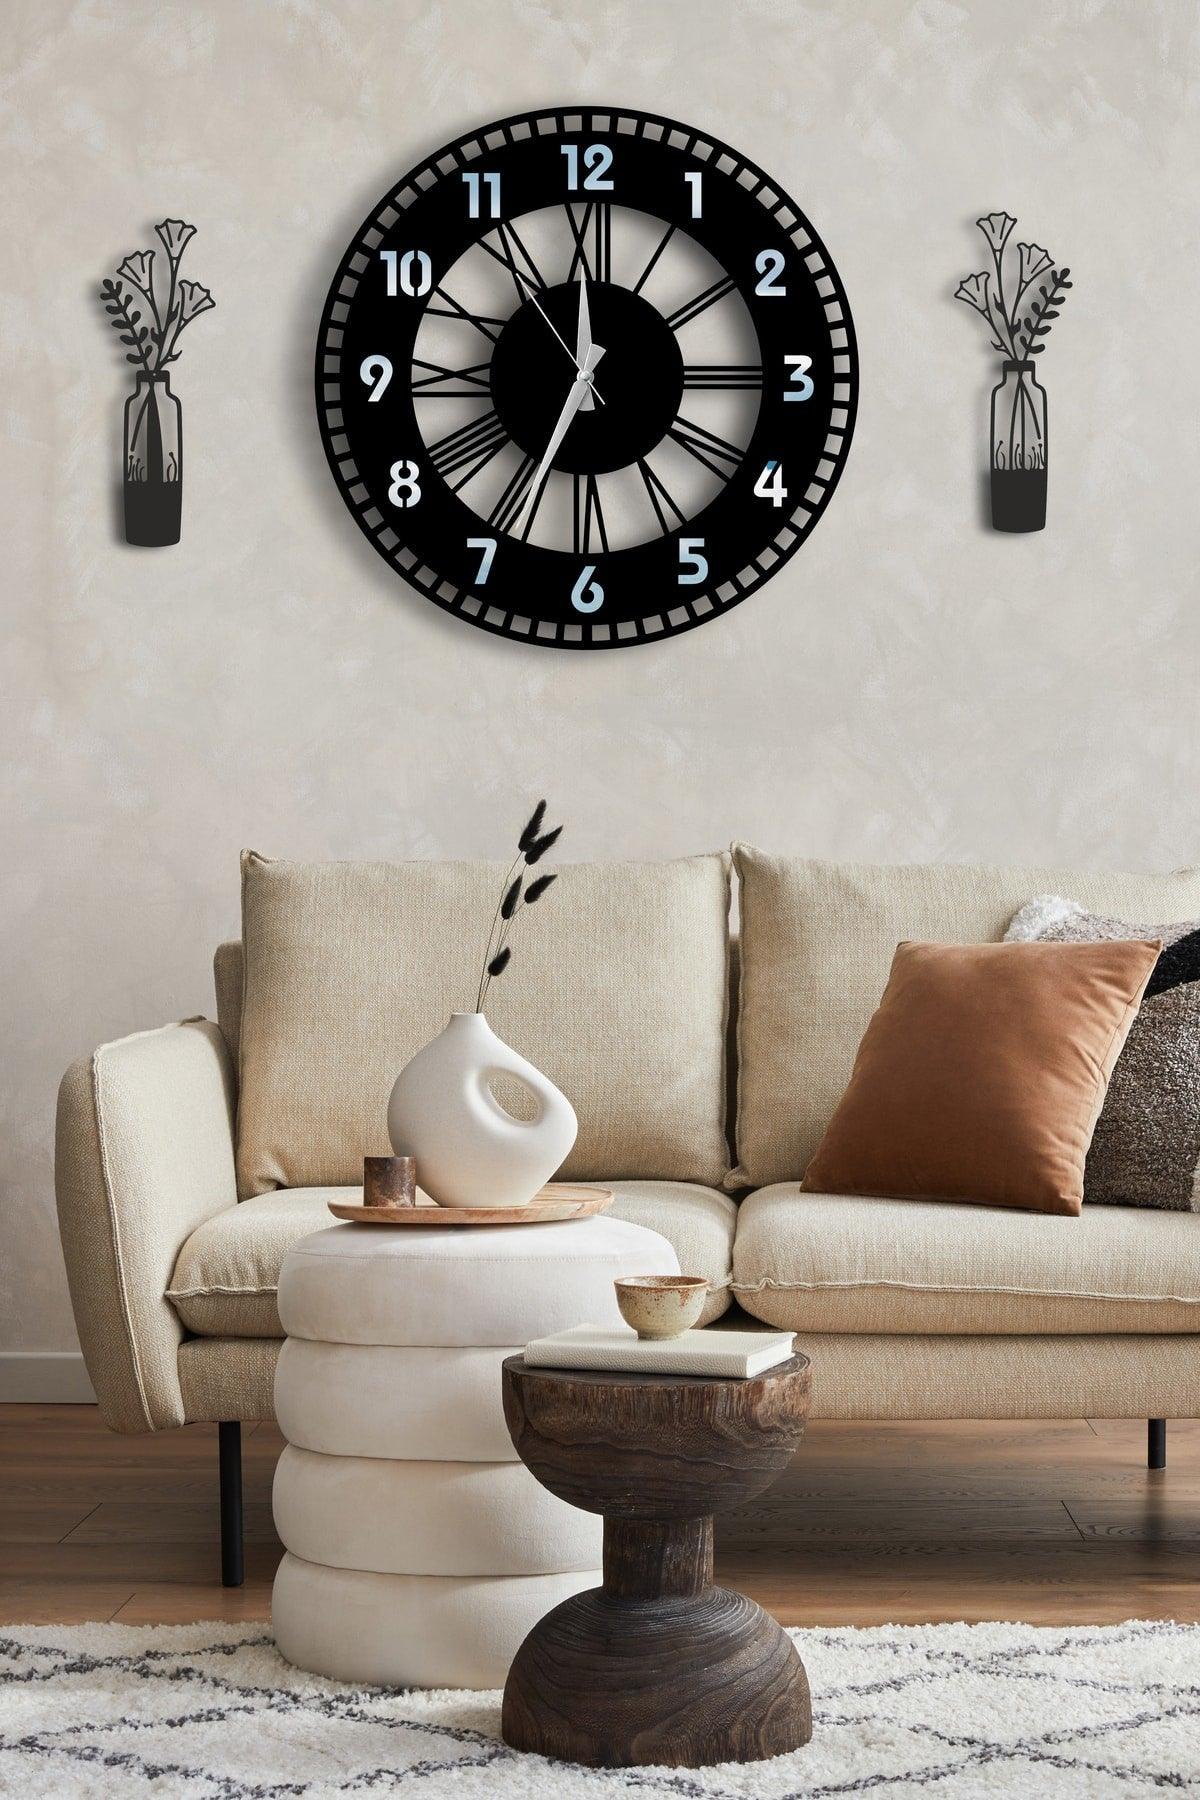 Decorative Silver Mirrored Wall Clock + Vase Painting - Swordslife